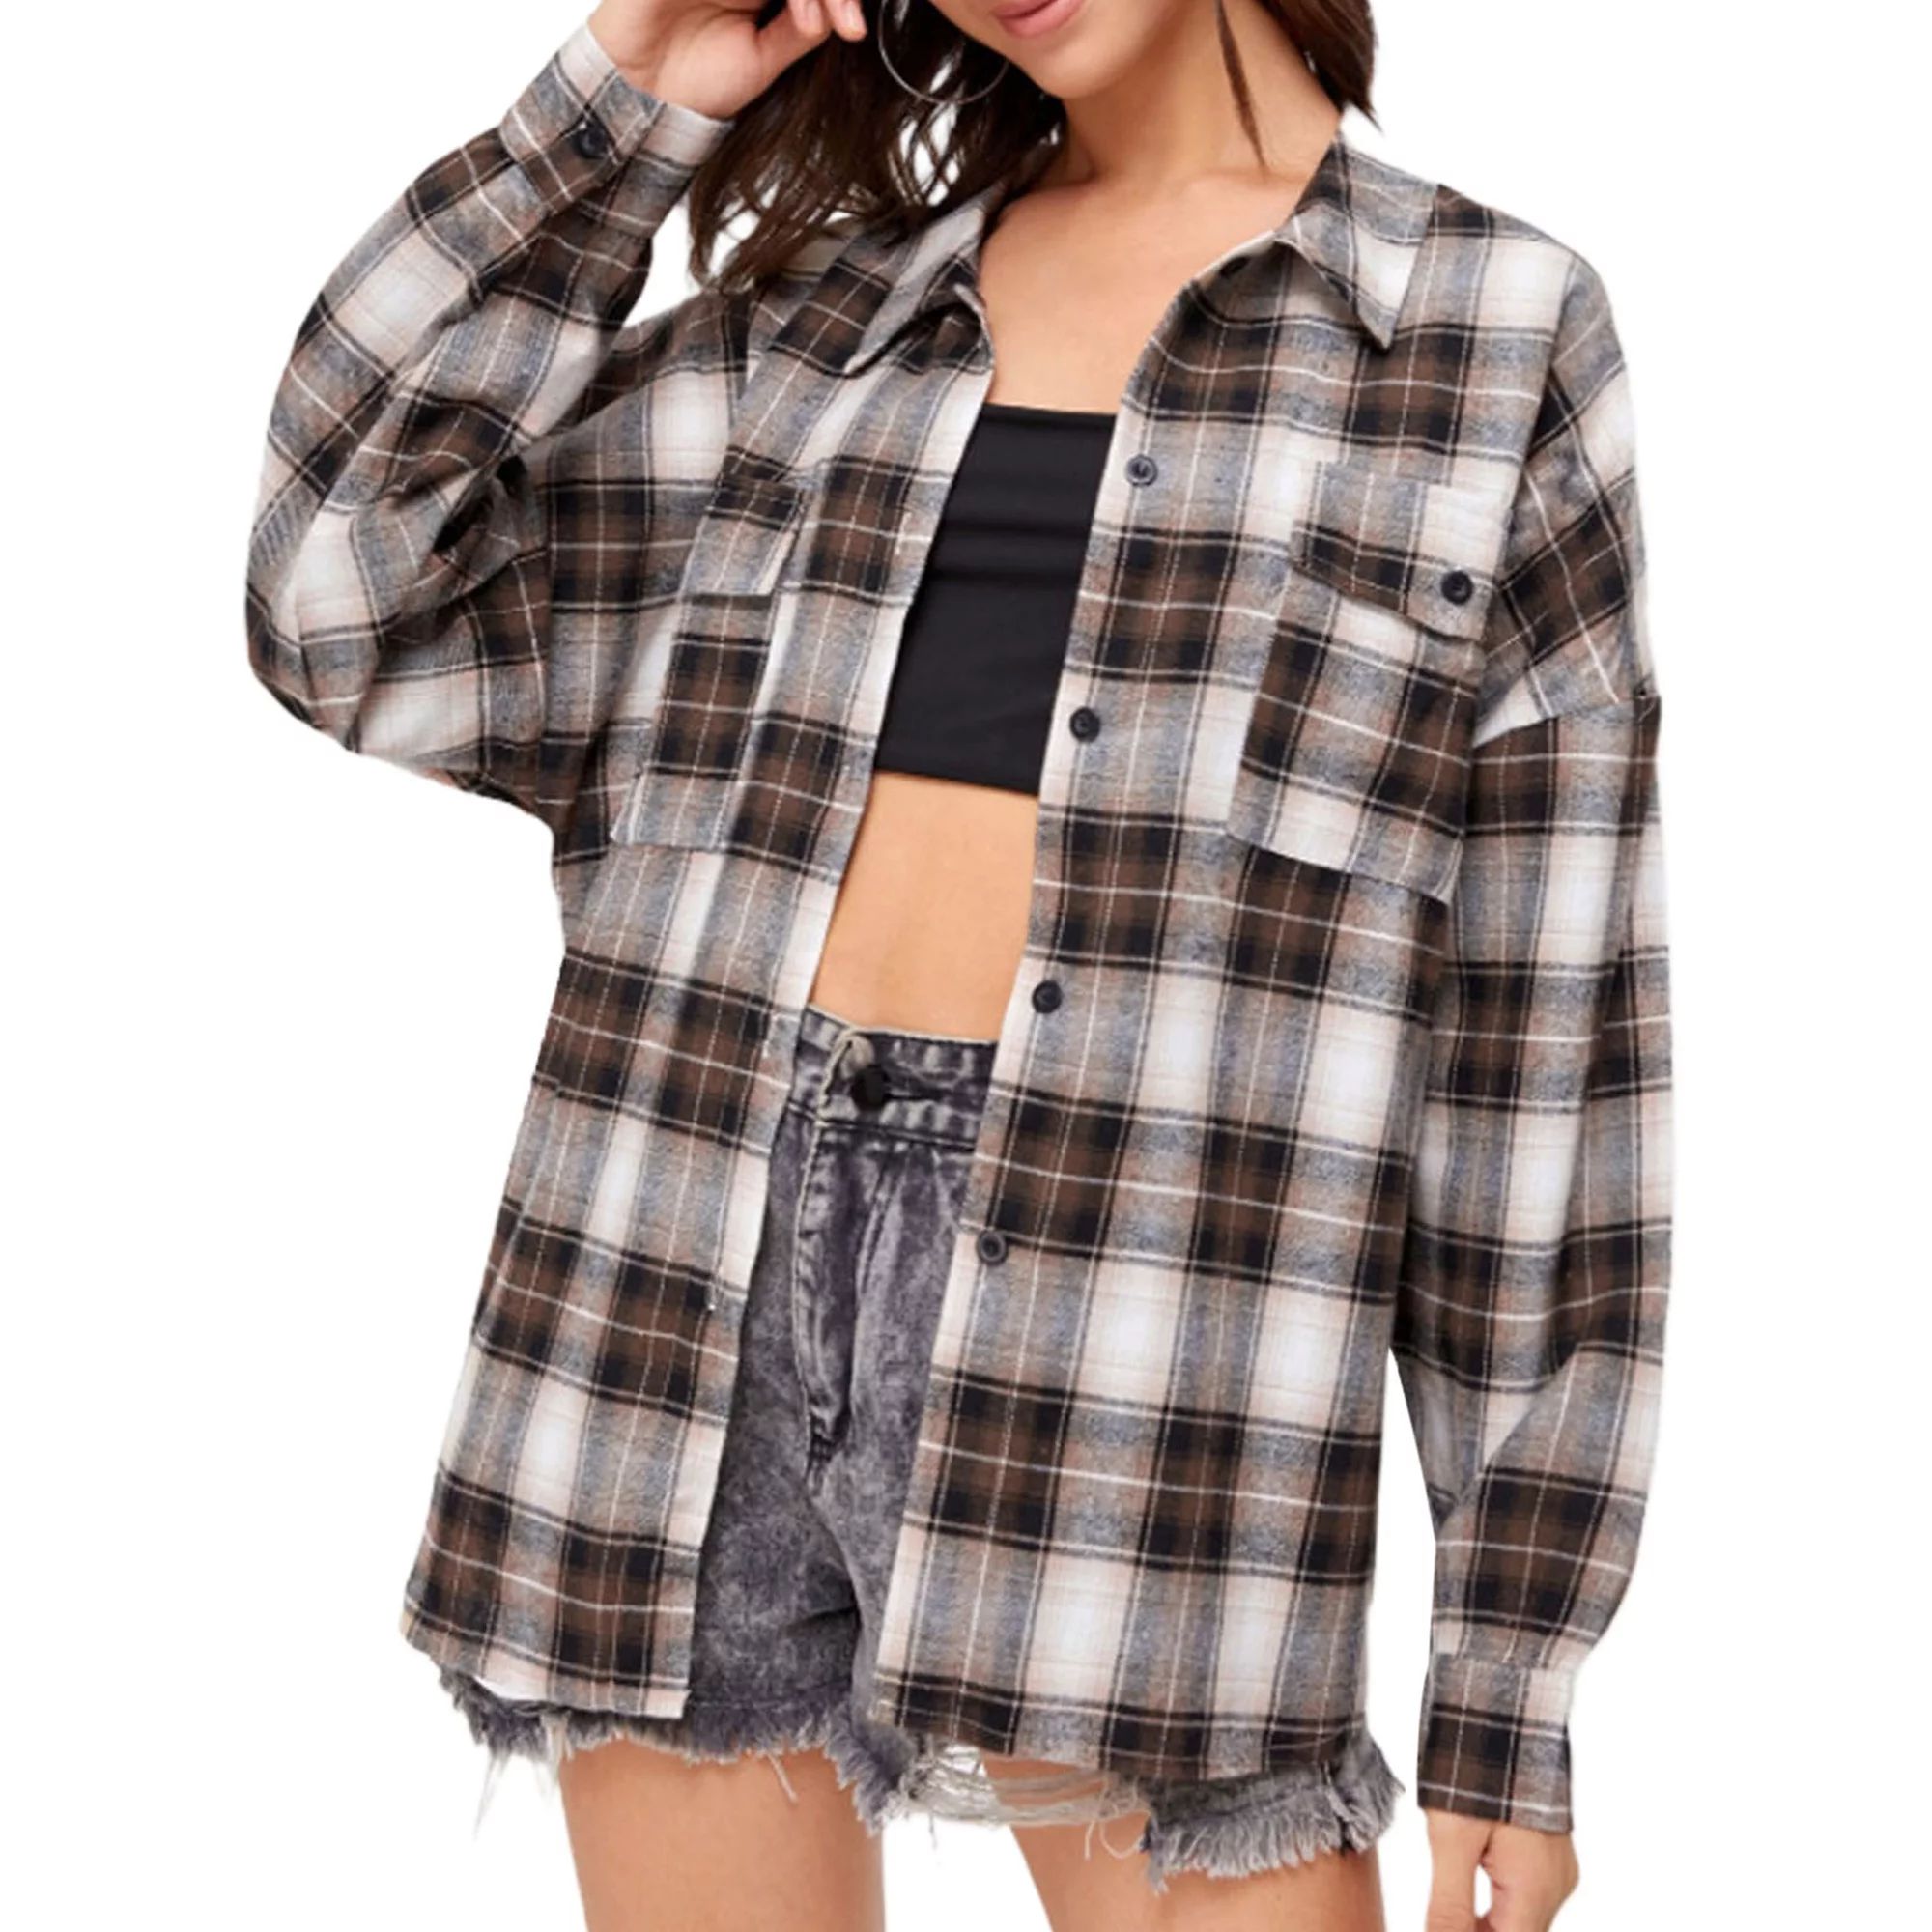 Musuos Women Plaid Shirt Flannel Oversized Checked Shirt Long Sleeve Blouse Tops | Walmart (US)